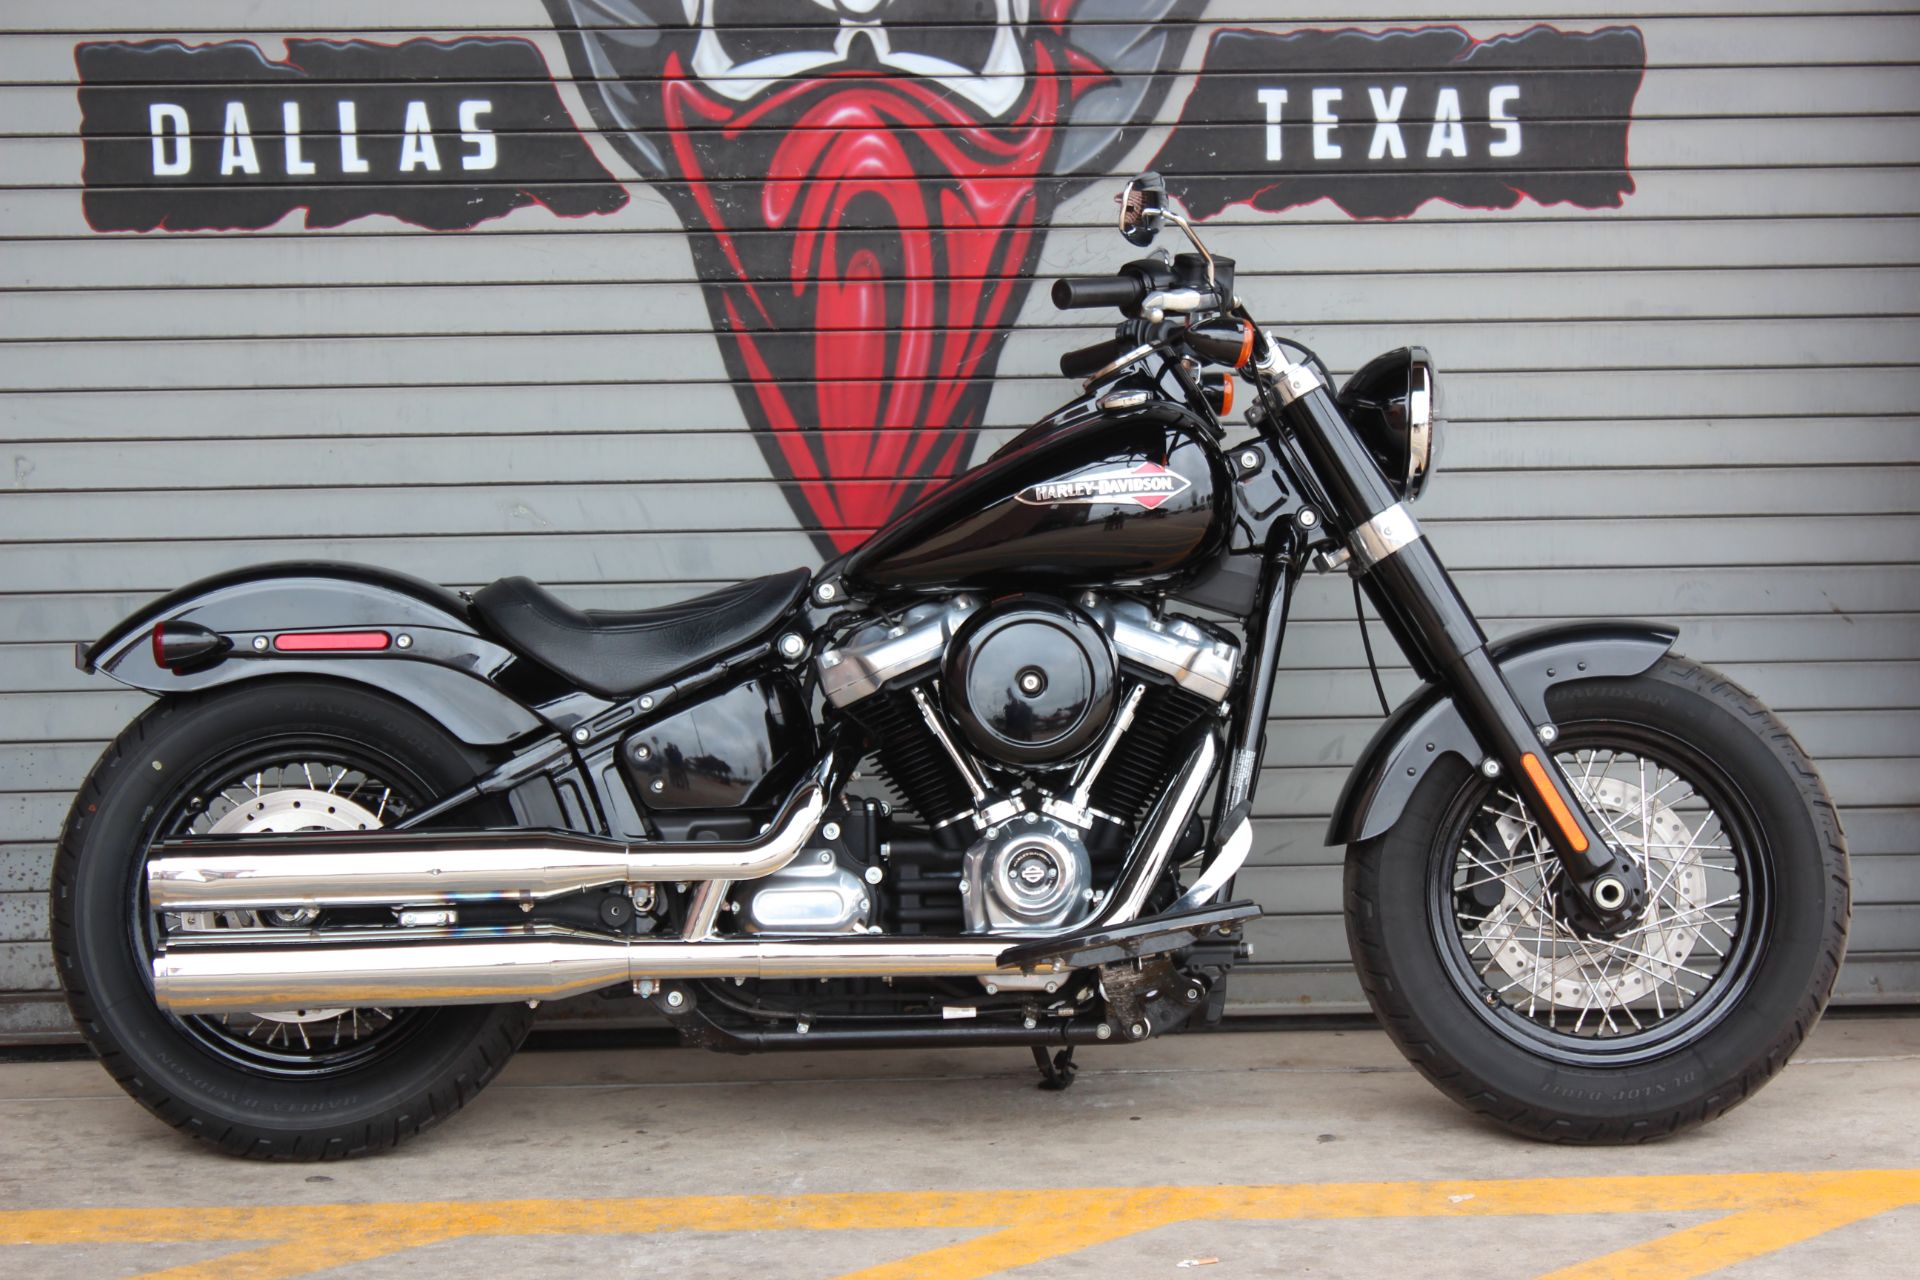 2019 Harley-Davidson Softail Slim® in Carrollton, Texas - Photo 3